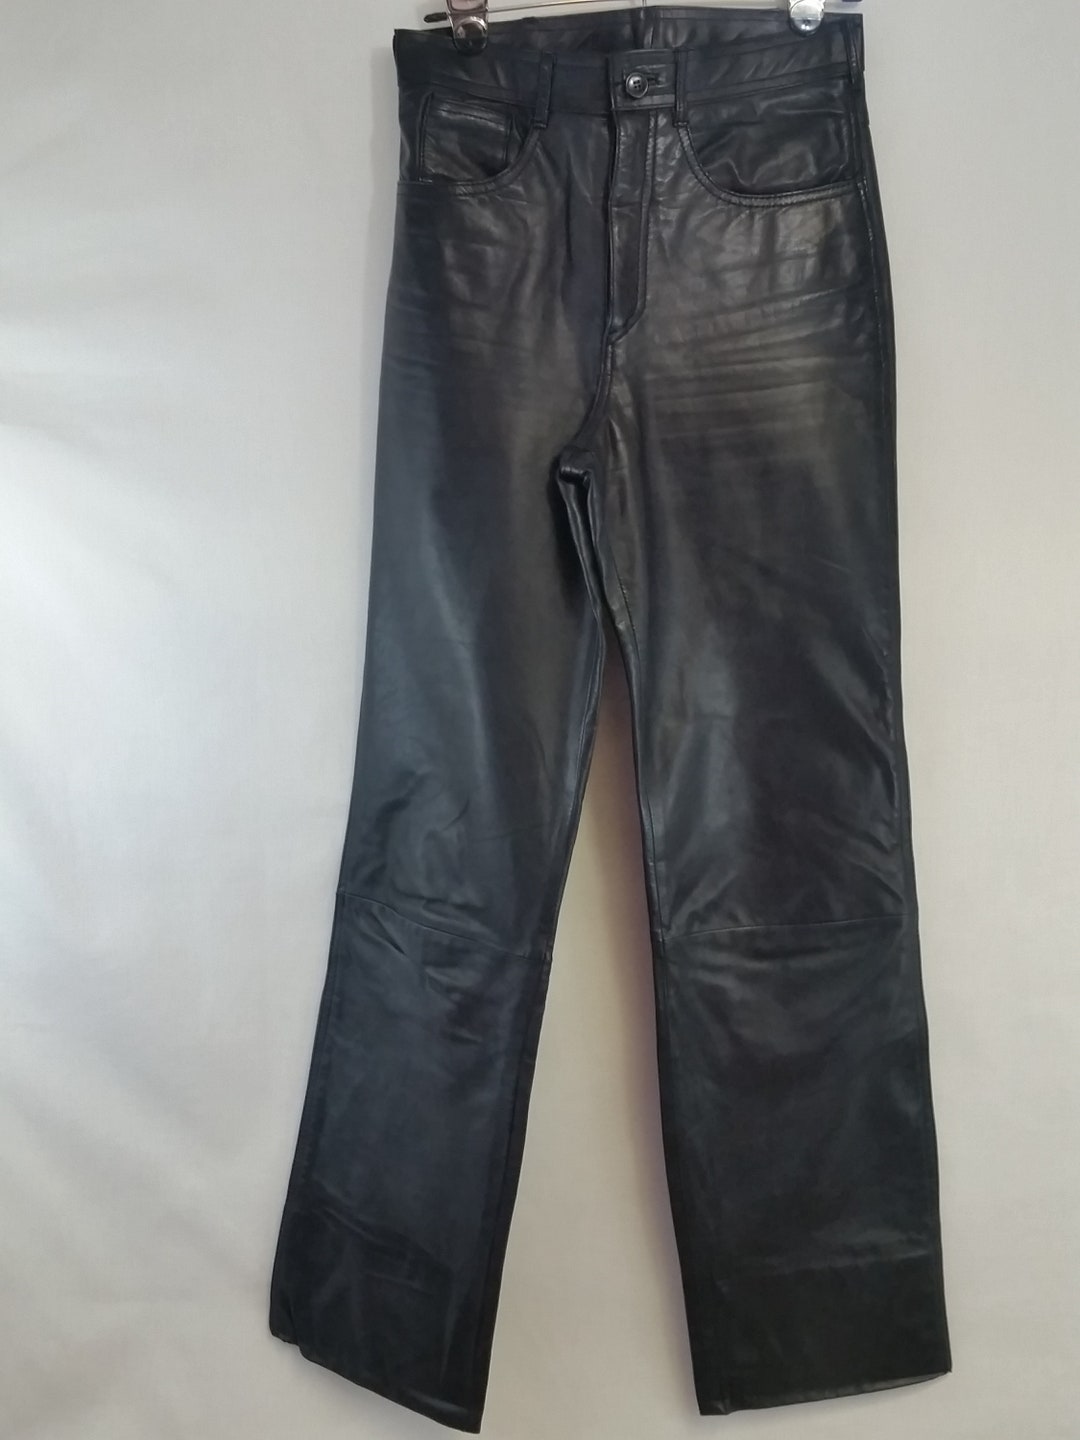 Vintage Black Leather Pants Women's 29 High Waist Straight - Etsy